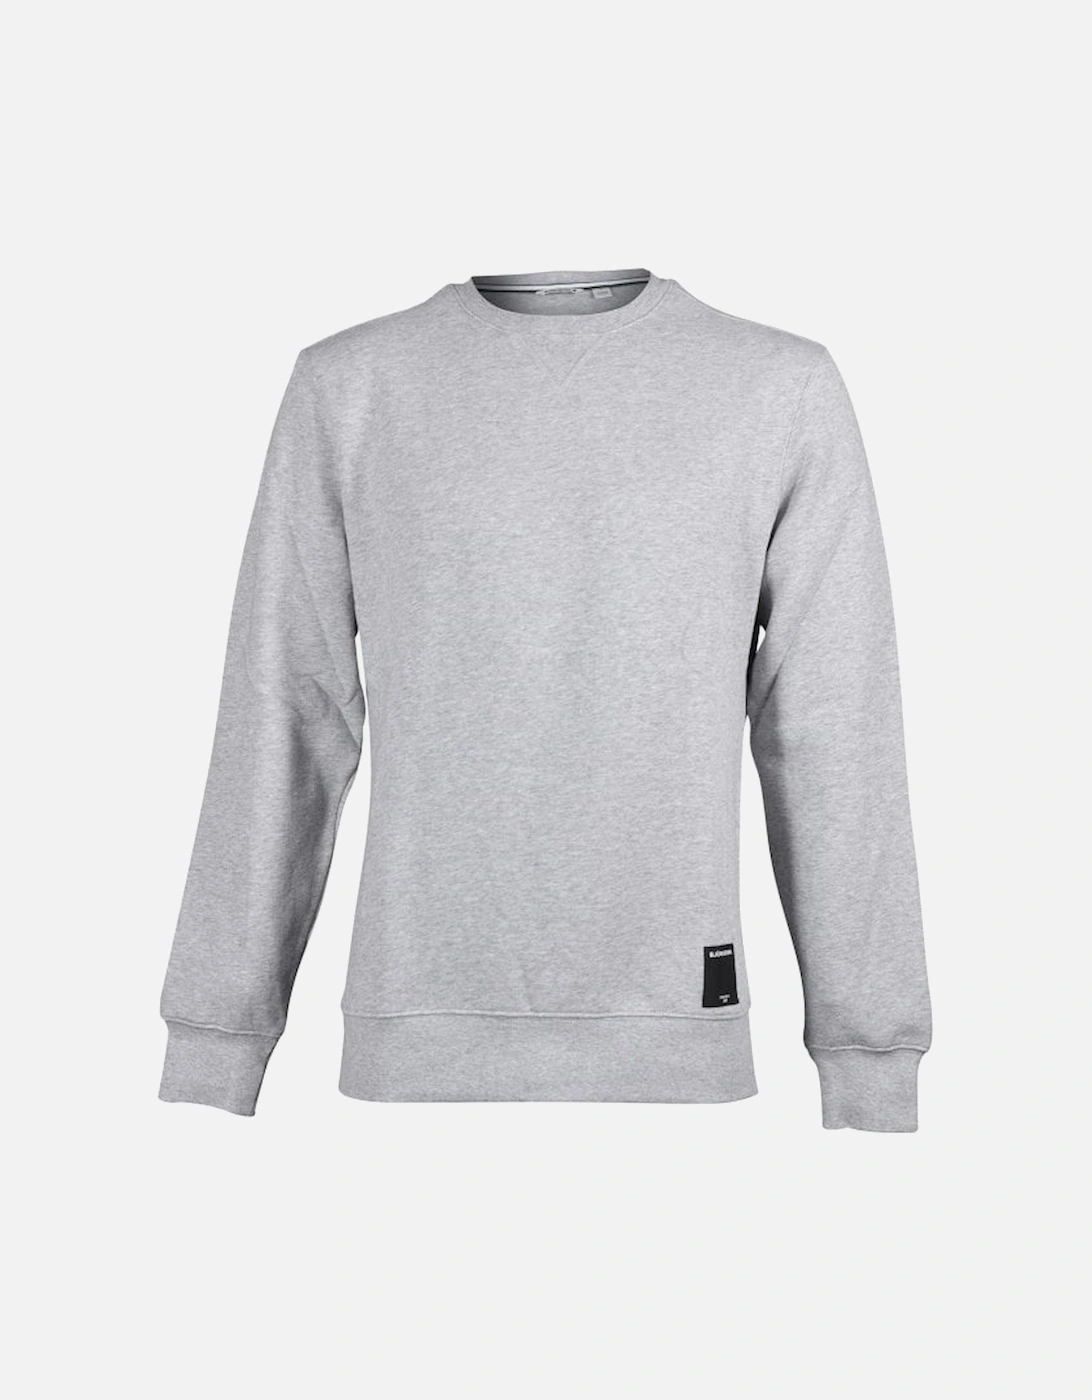 Centre Tracksuit Sweatshirt, Light Grey Melange, 11 of 10